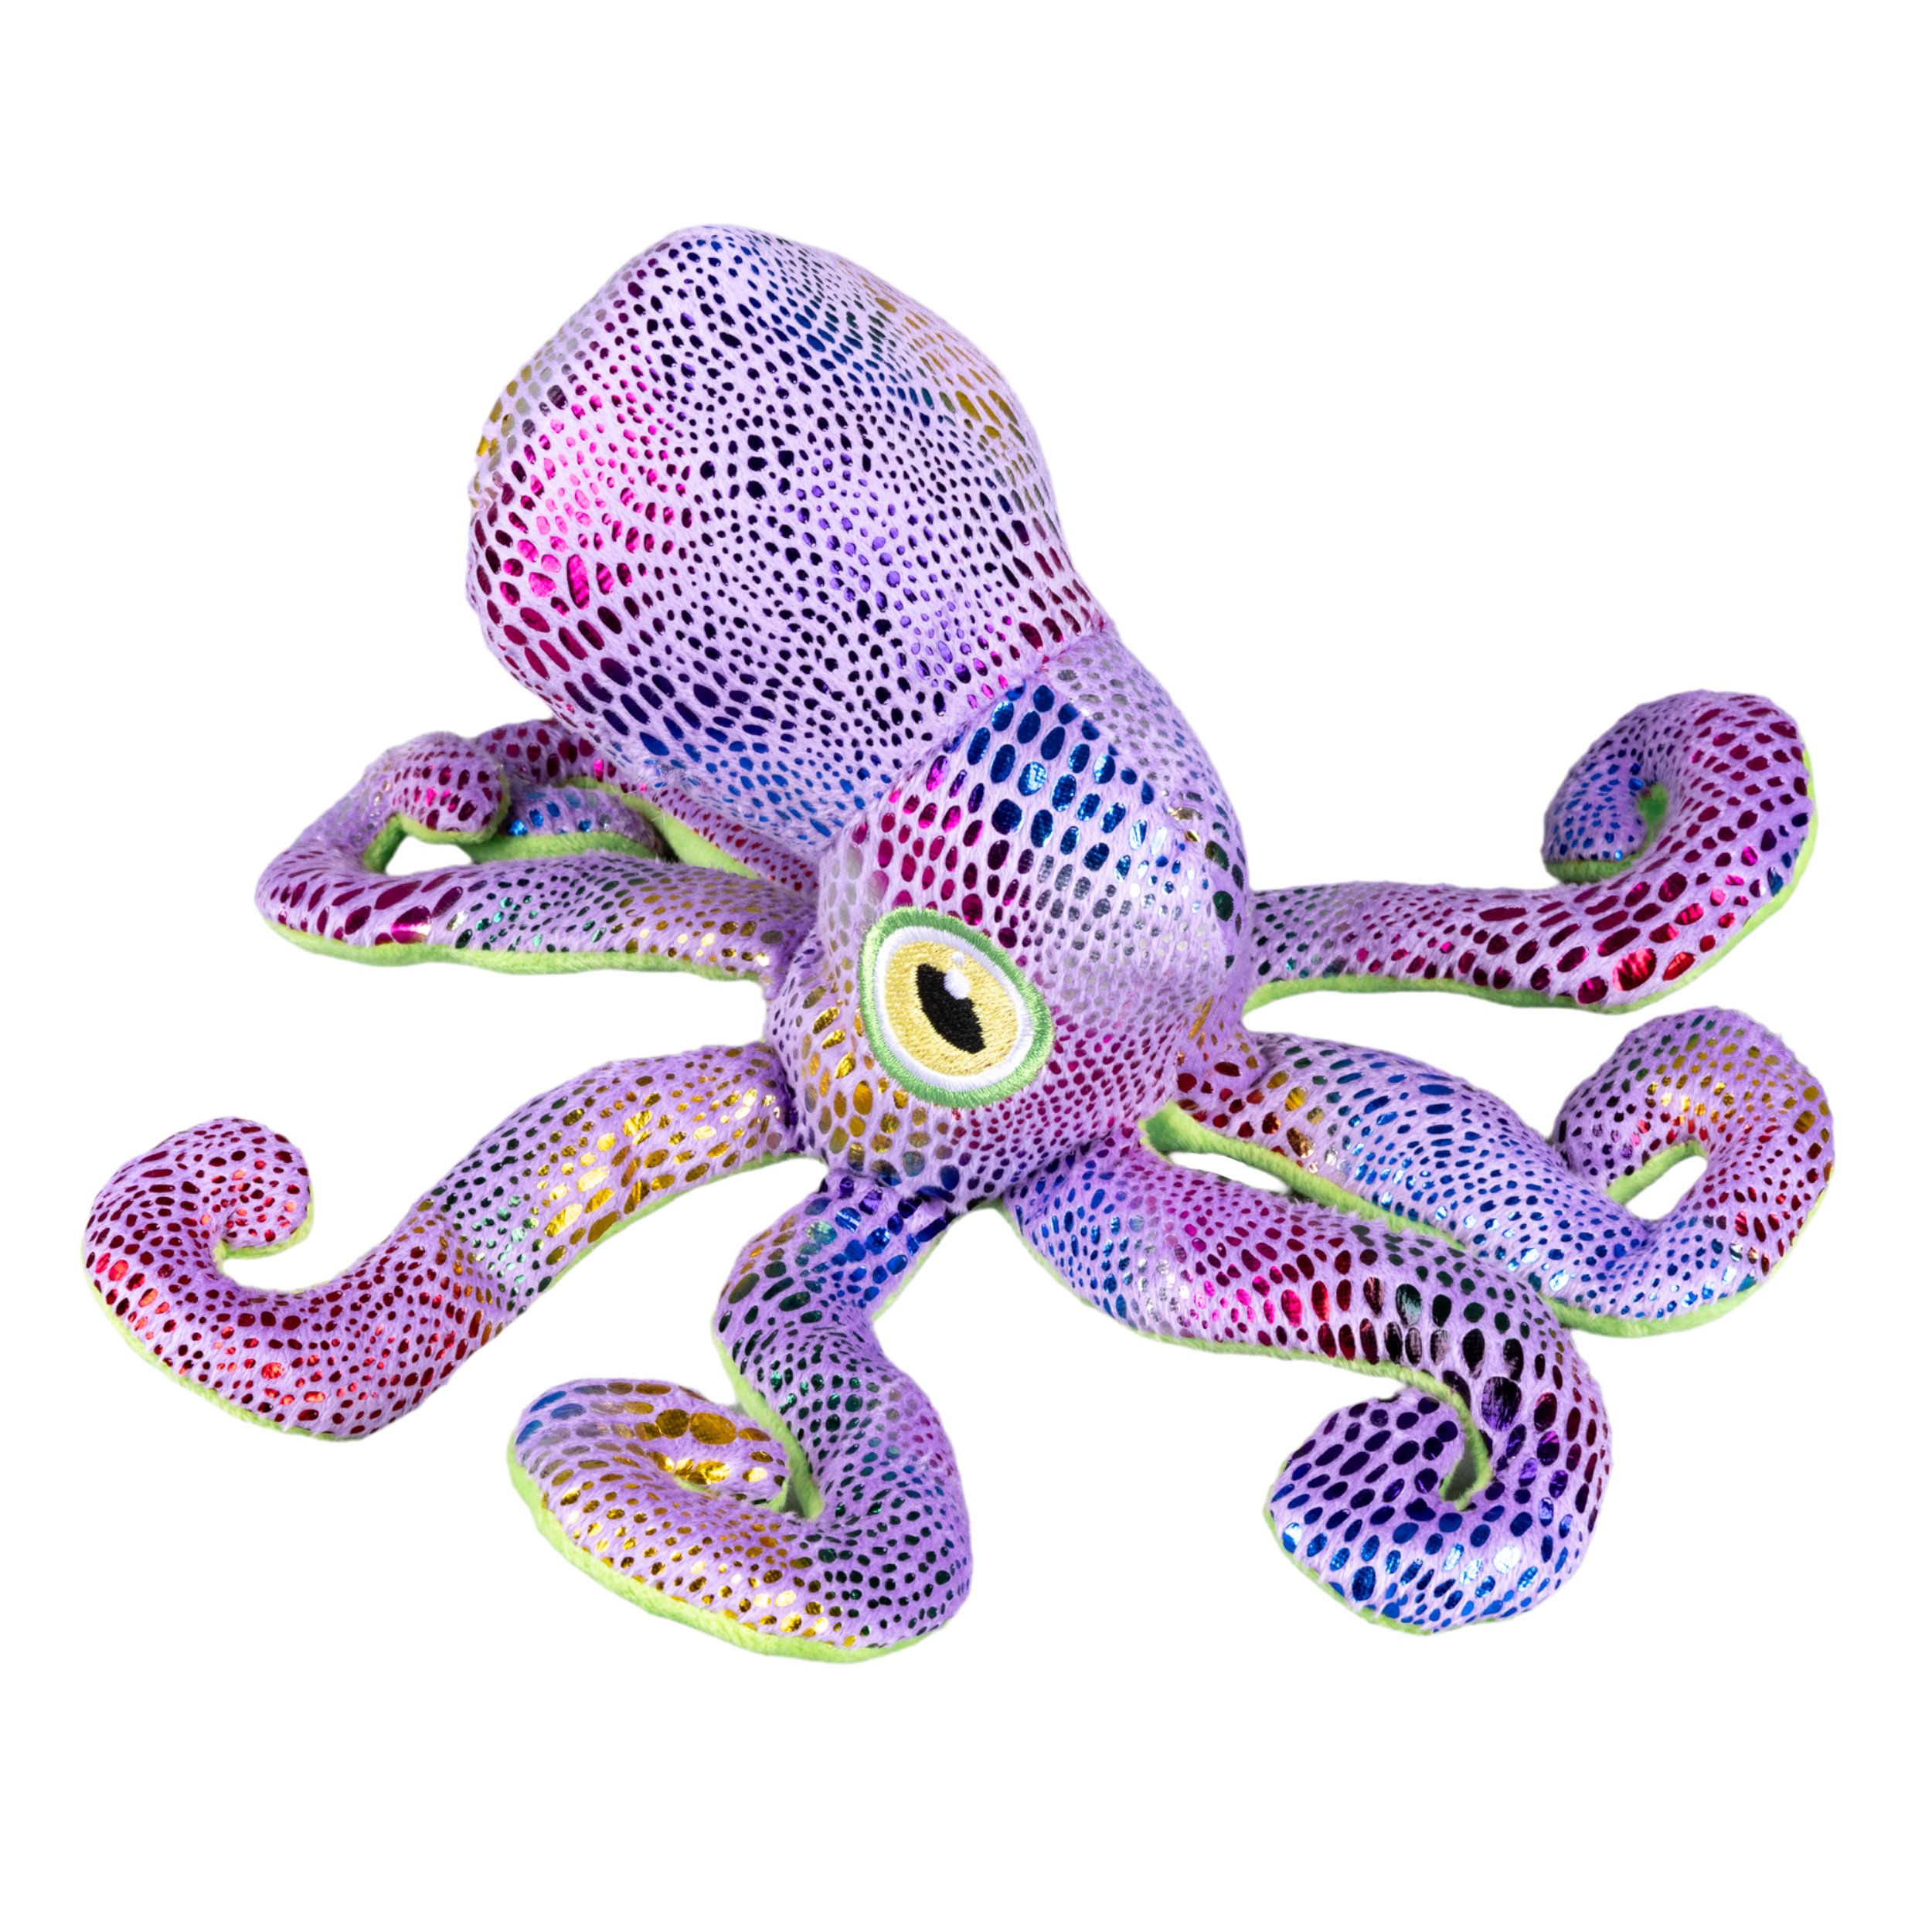 purple octopus plush